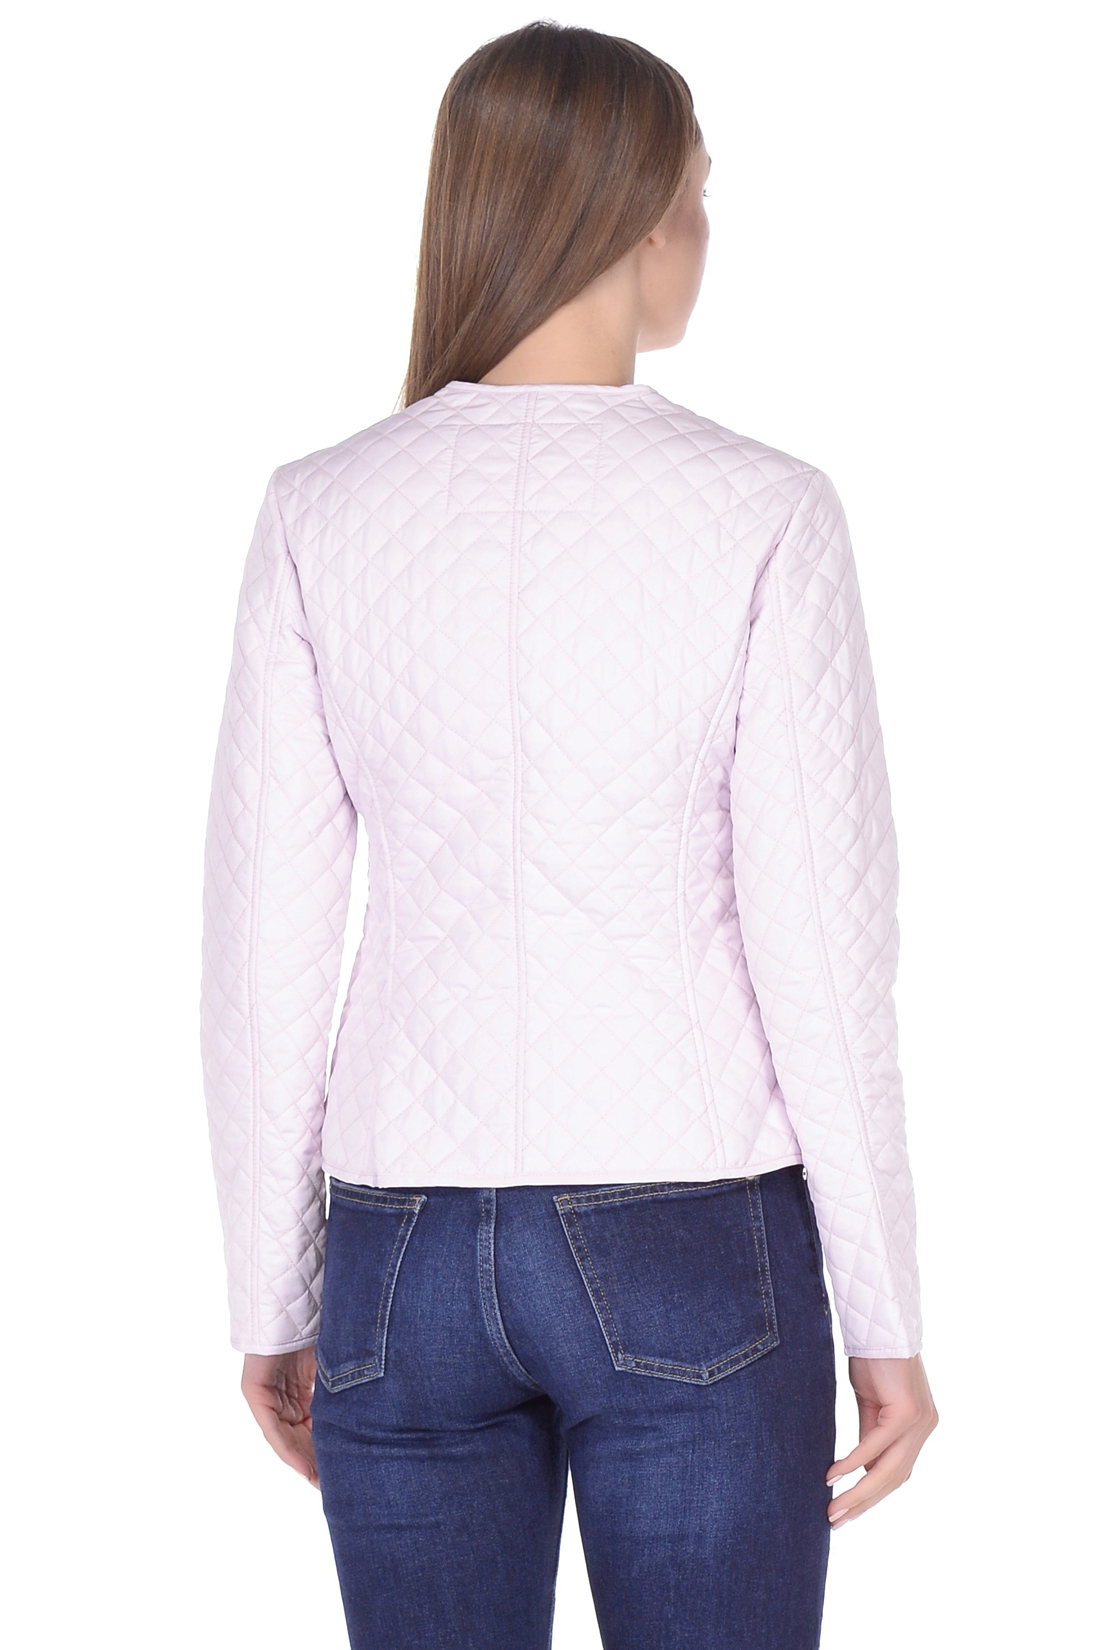 Стёганая куртка-косуха (арт. baon B038005), размер XL, цвет розовый Стёганая куртка-косуха (арт. baon B038005) - фото 2